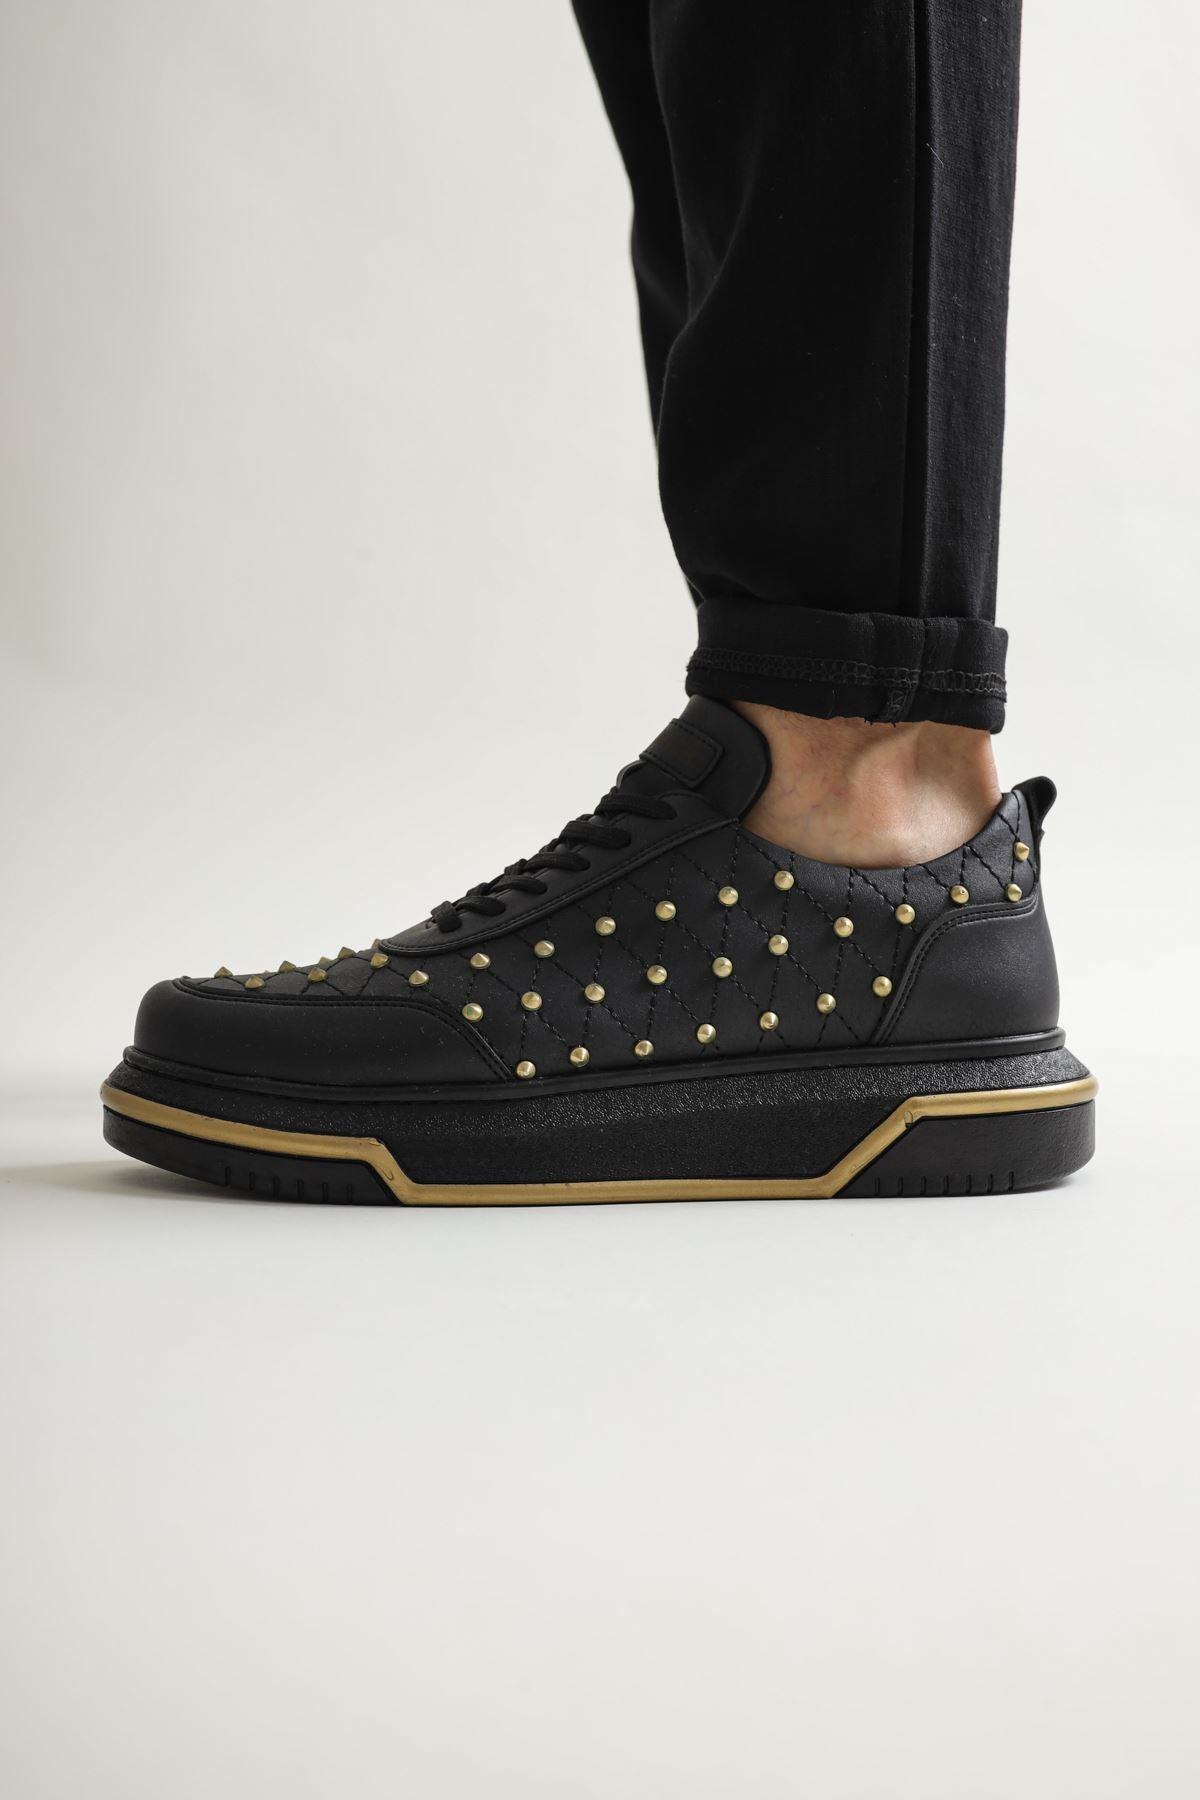 CH139 ST Men's Shoes BLACK/GOLD - STREET MODE ™